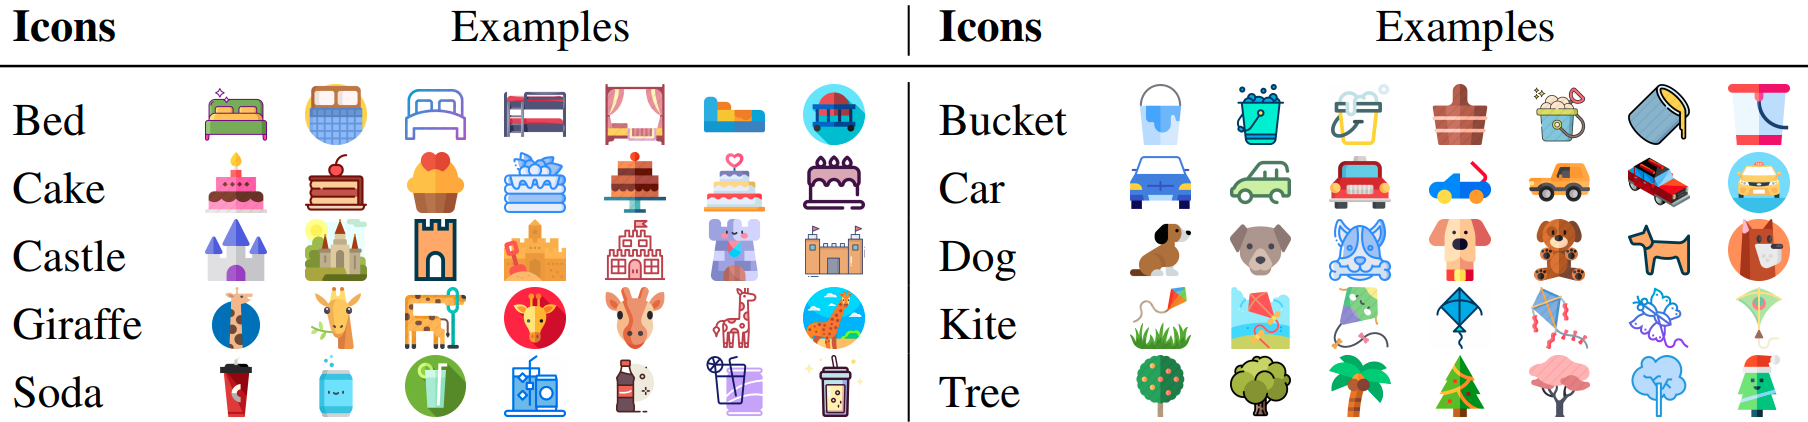 icon_examples